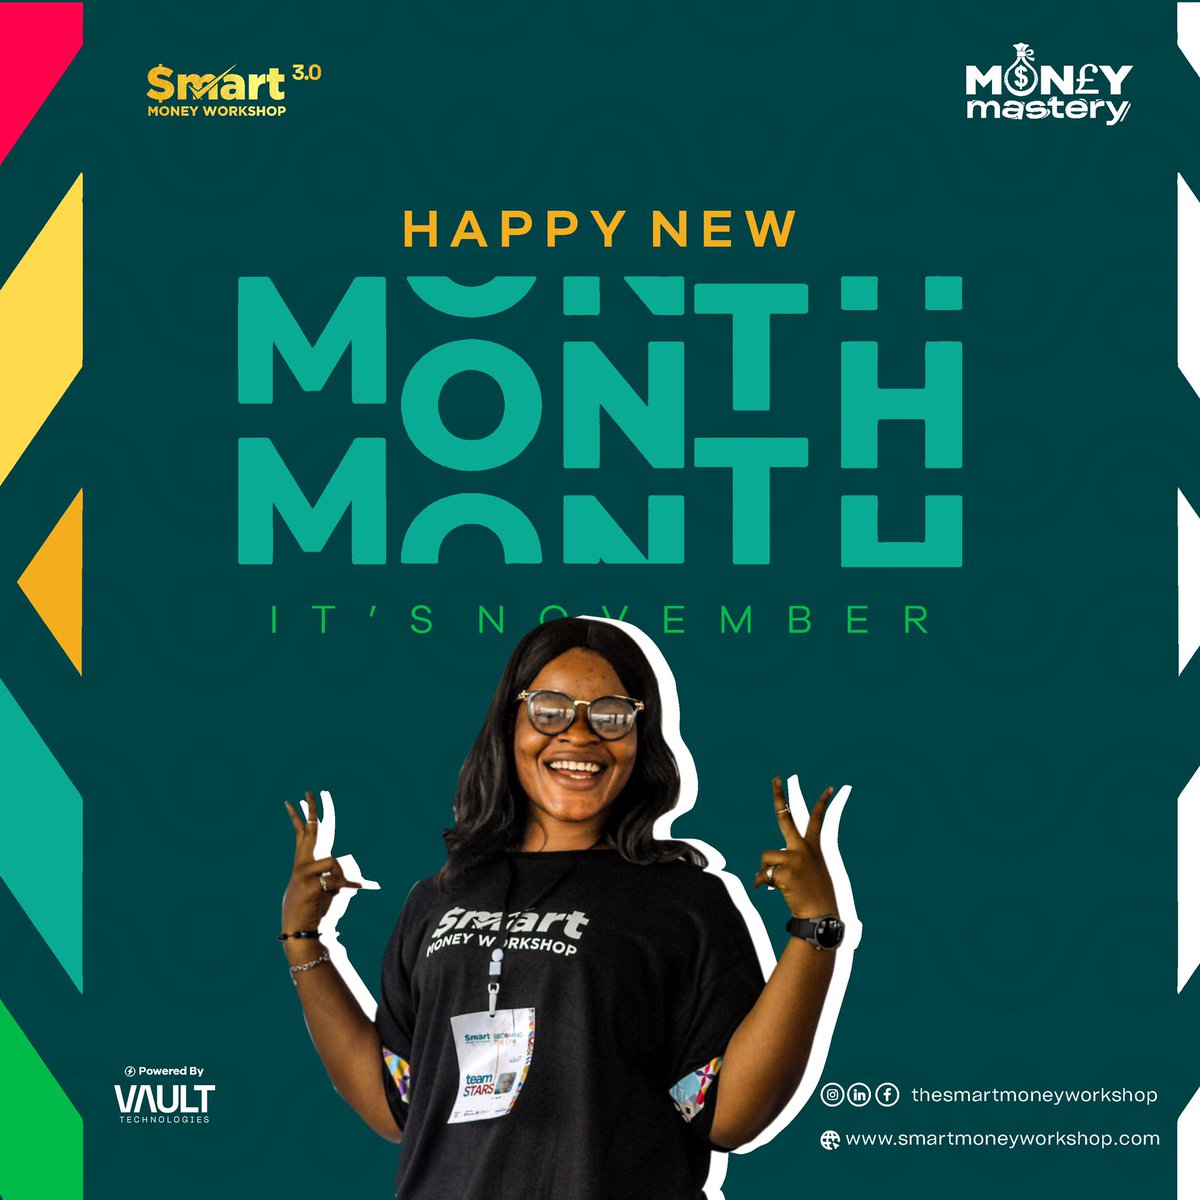 Happy New Month you'll🤗

#smartmoneyworkshop #Smw #financialworkshop #thesmartmoneyworkshop3.0 #smw3.0